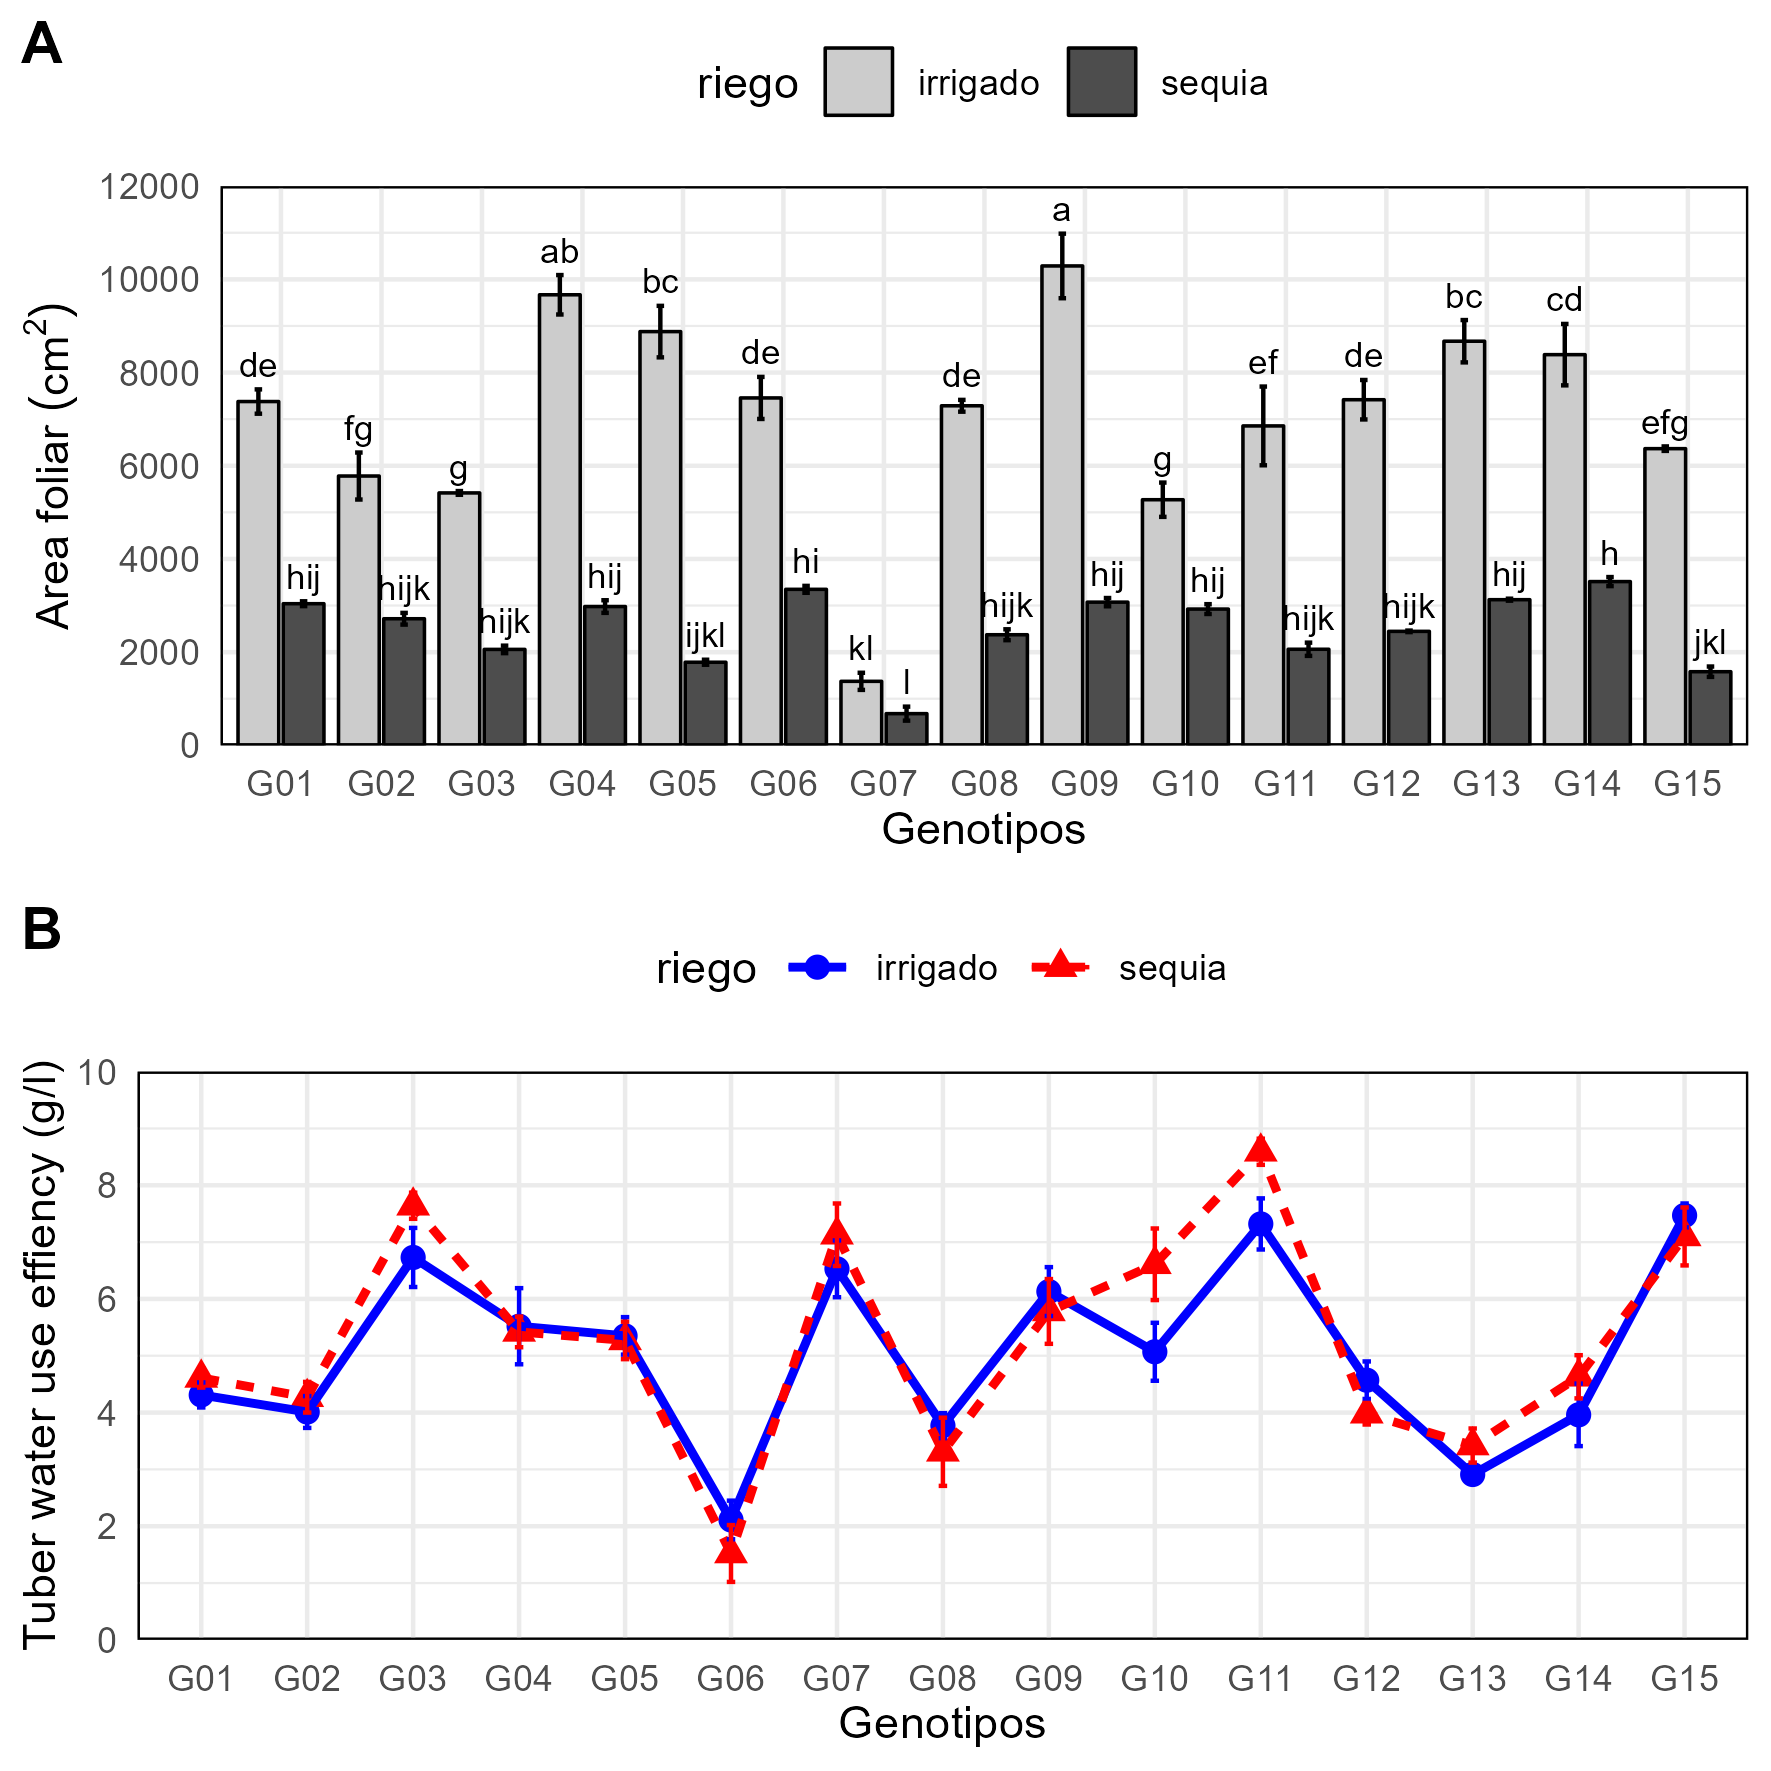 Water use effiency in 15 potato genotypes A) Bar plot B) Line plot.